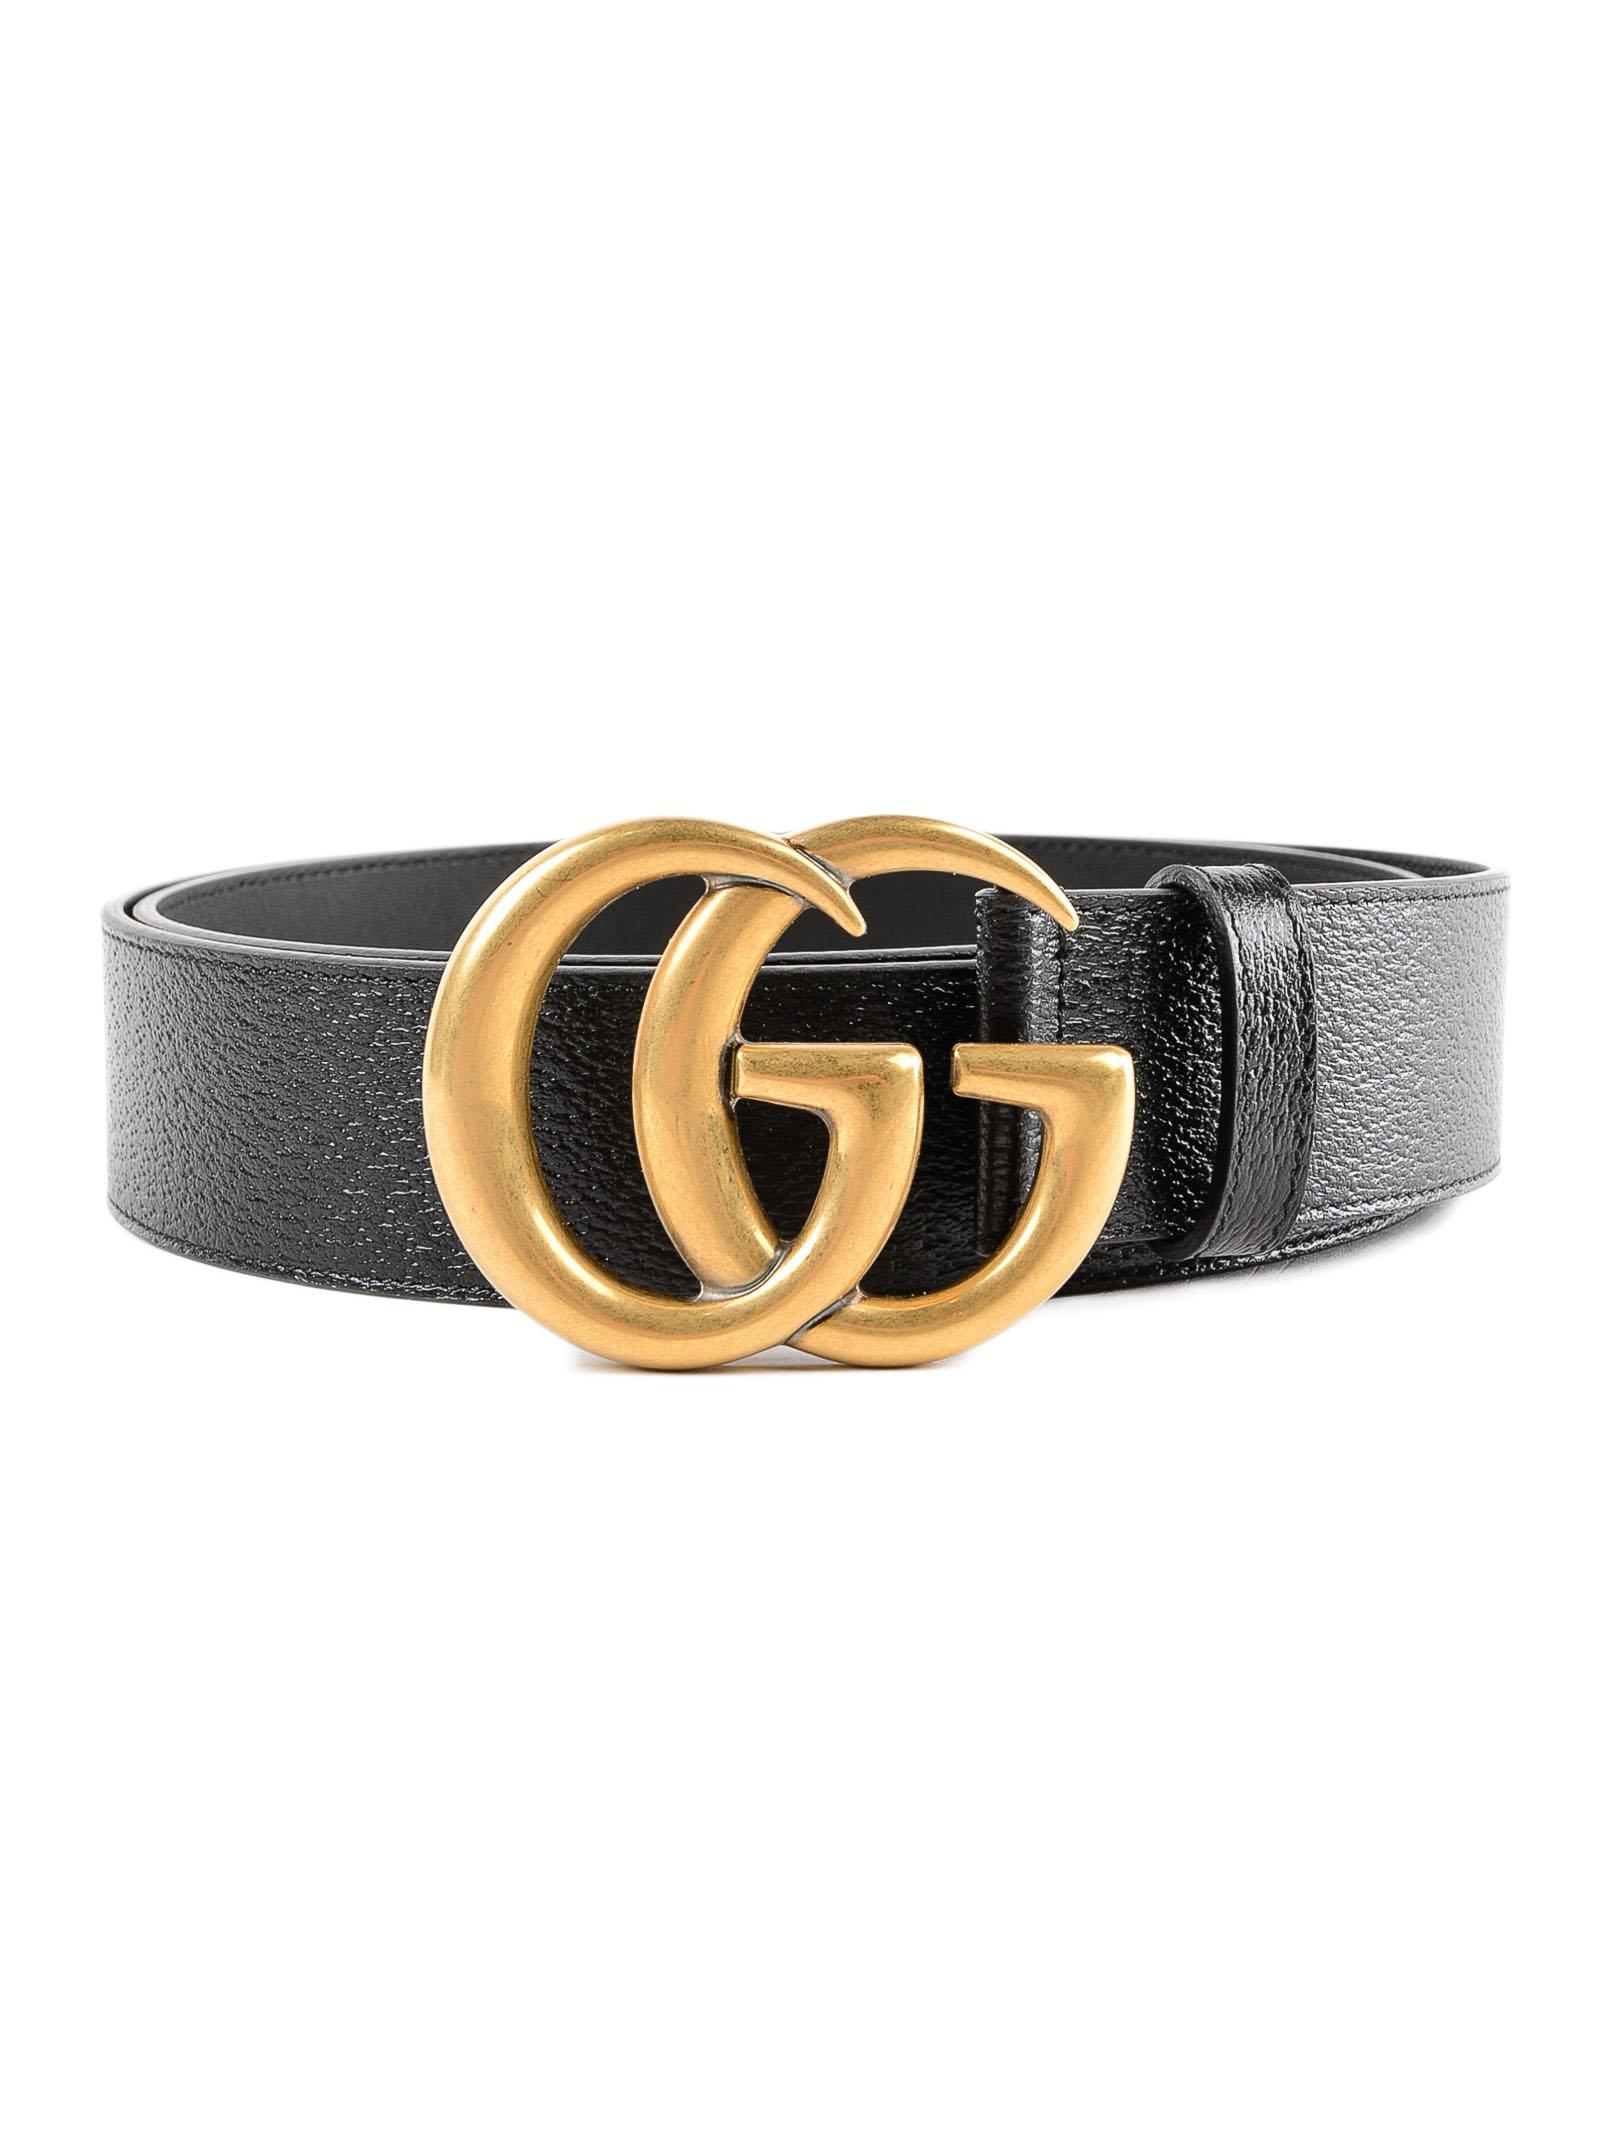 Gucci Leather Men's Interlocking GG Marmont Belt in Black for Men - Lyst